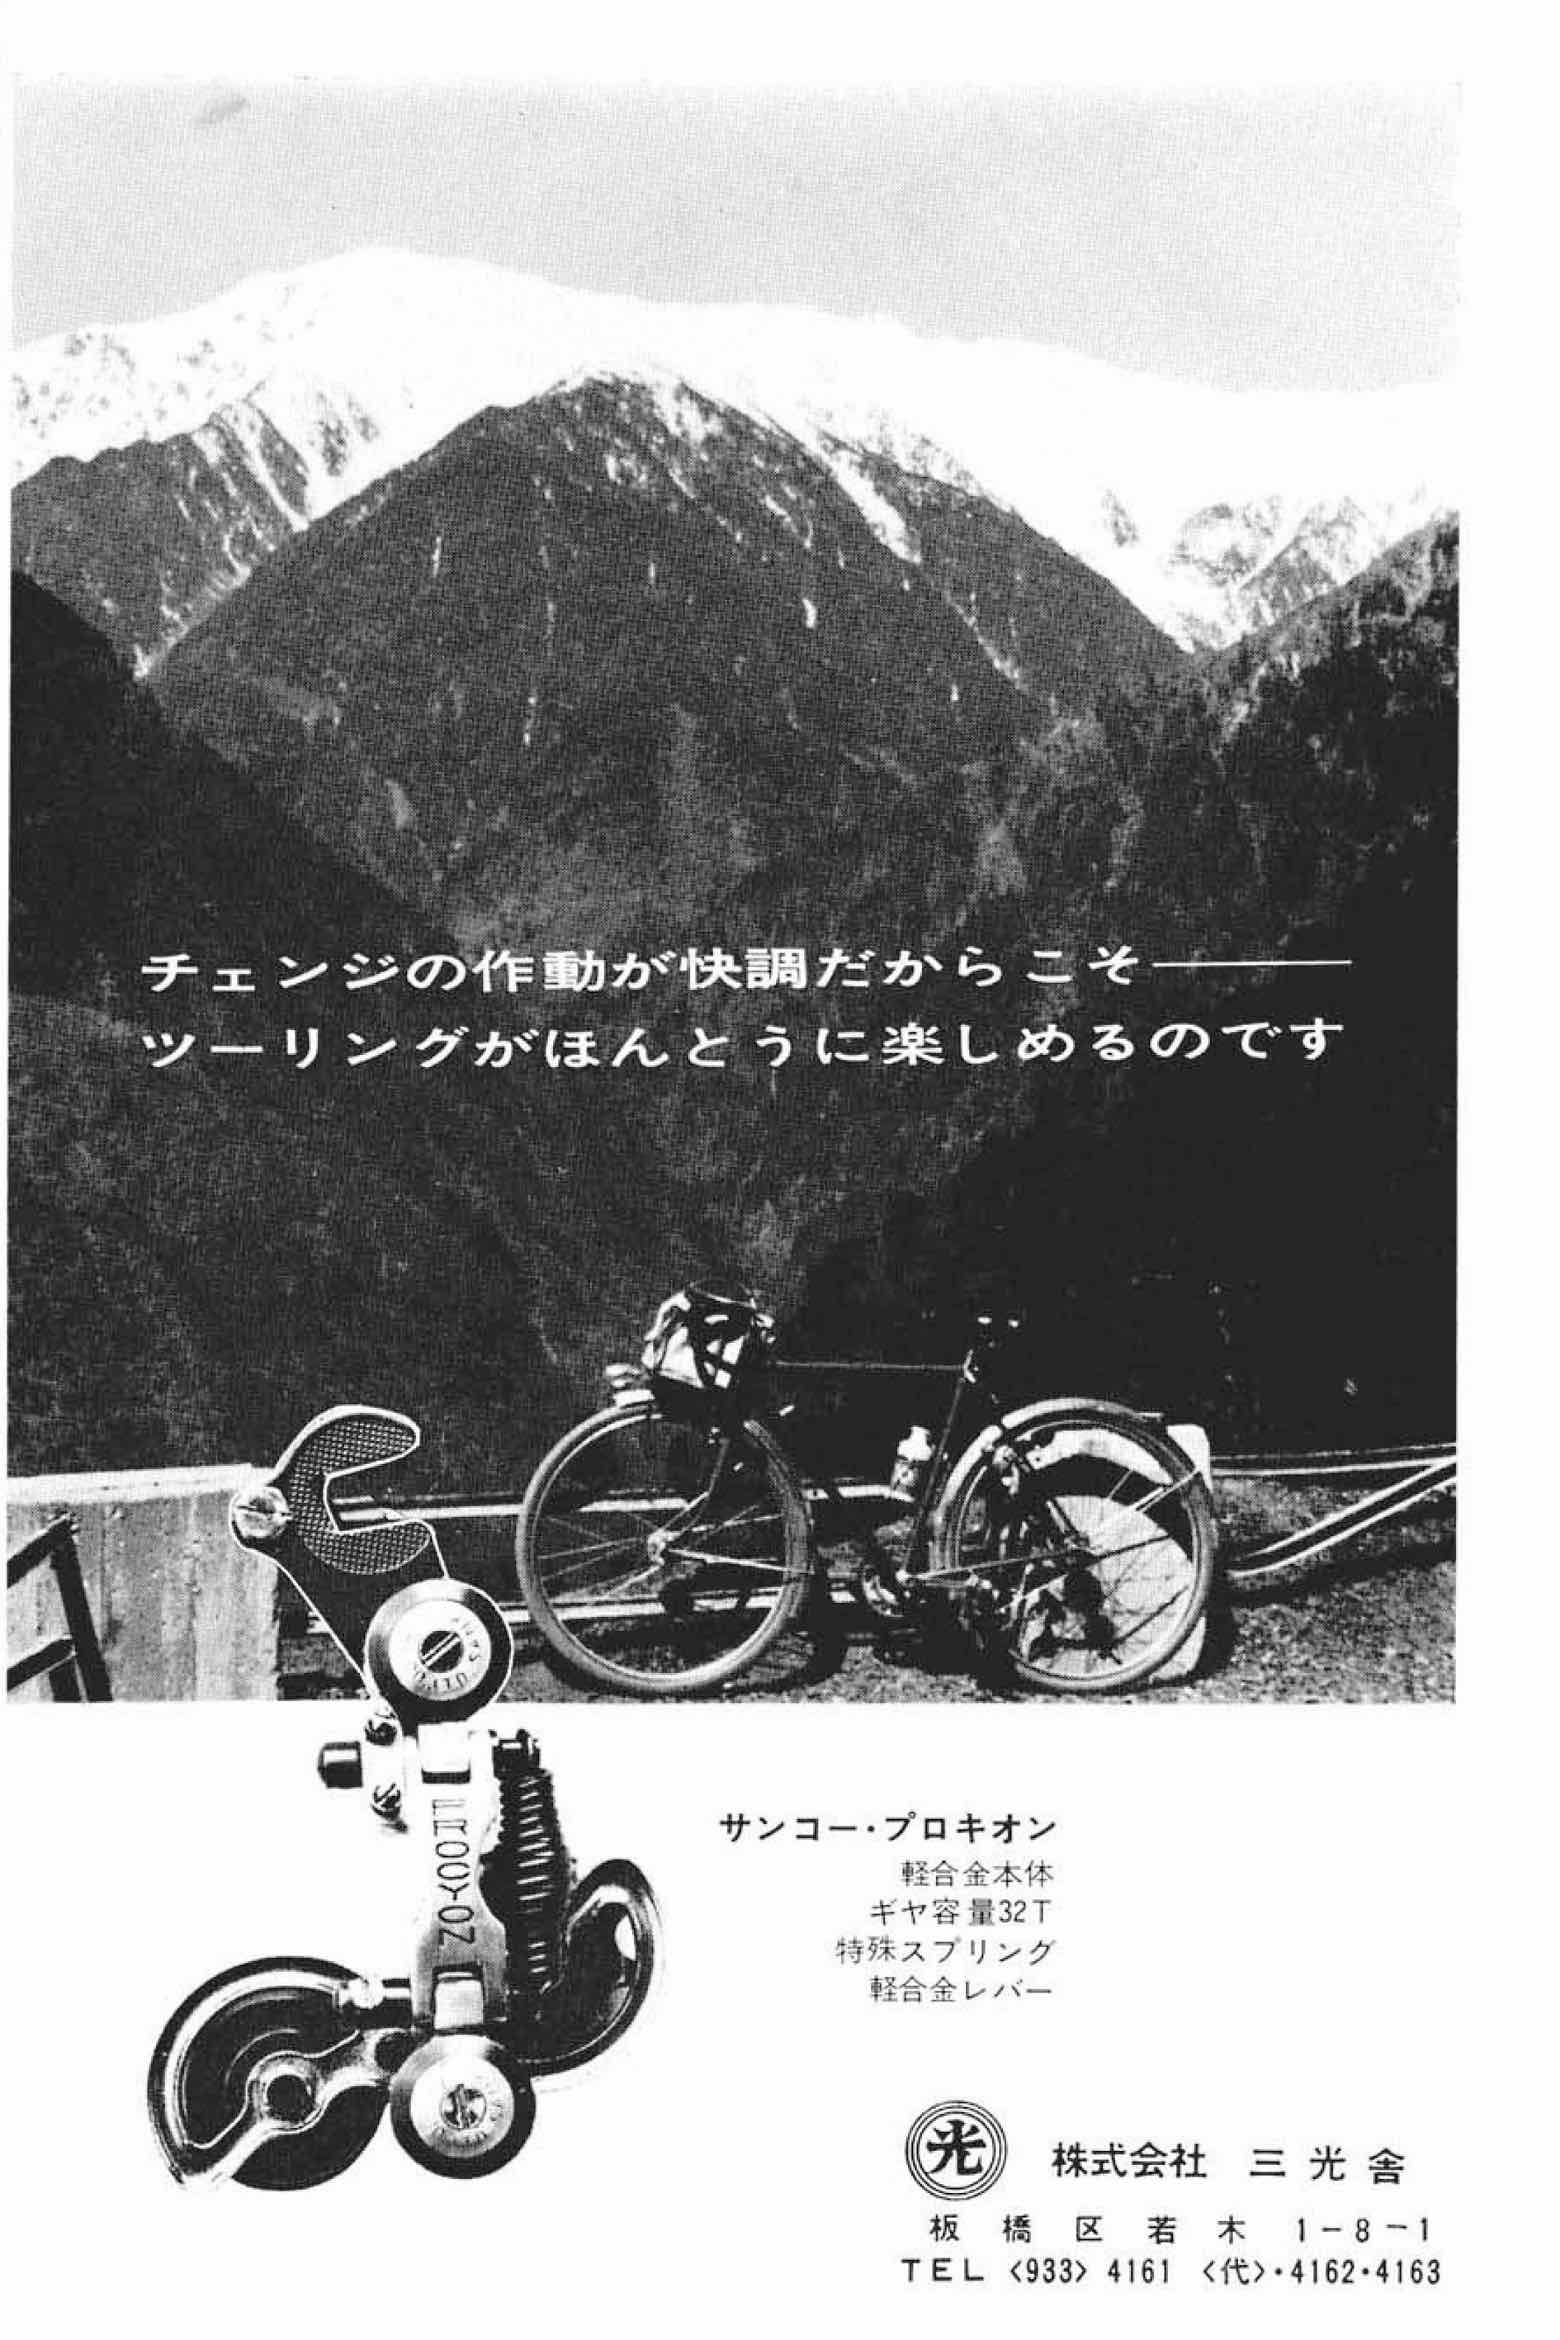 New Cycling July 1967 - Sanko advert main image